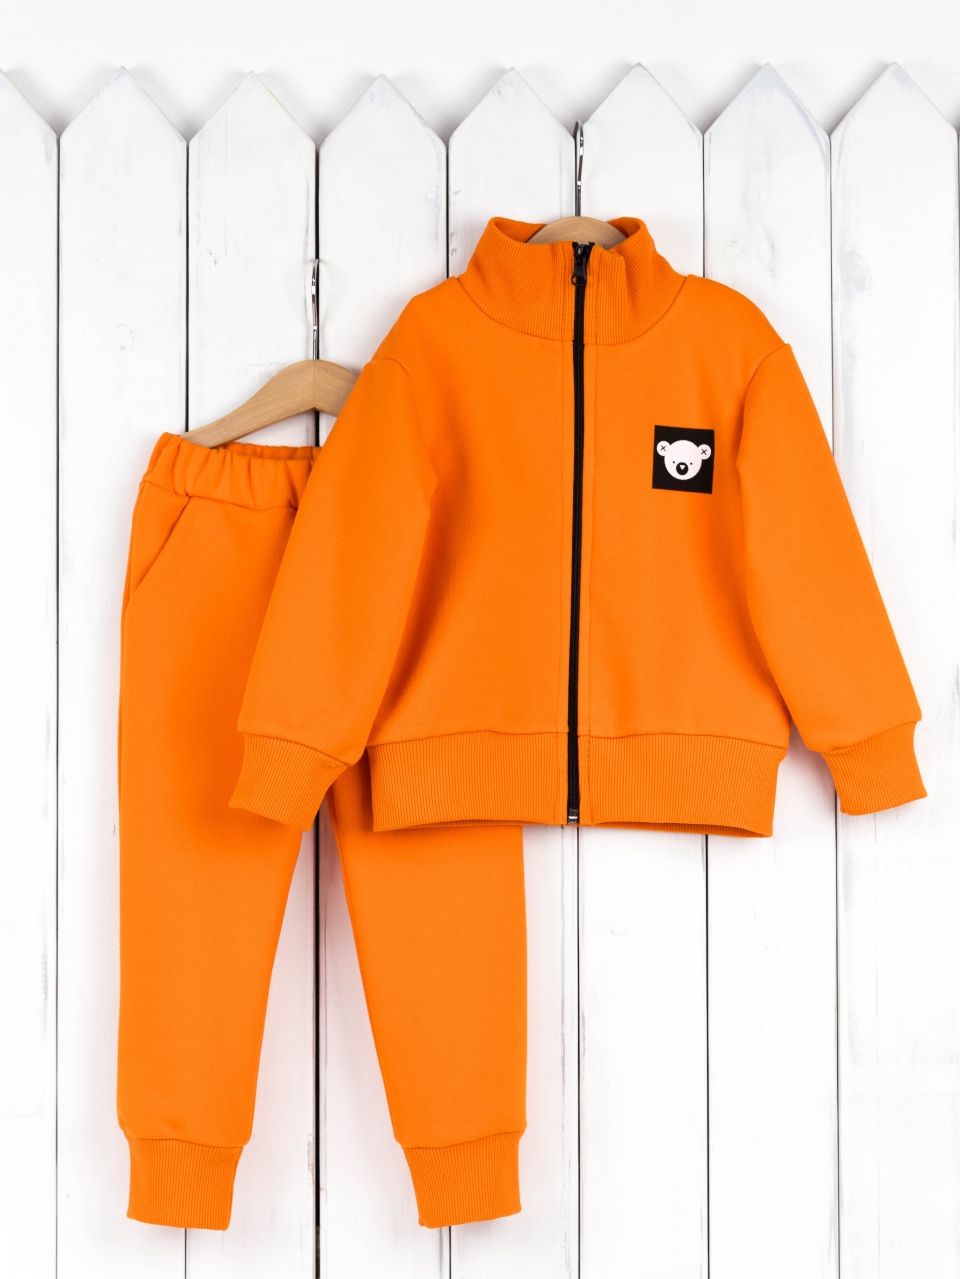 КД475/1-Ф Комплект детский р. 104 (футер 3-х нитка петля/куртка+брюки/апельсин) Бэби бум - Магнитогорск 